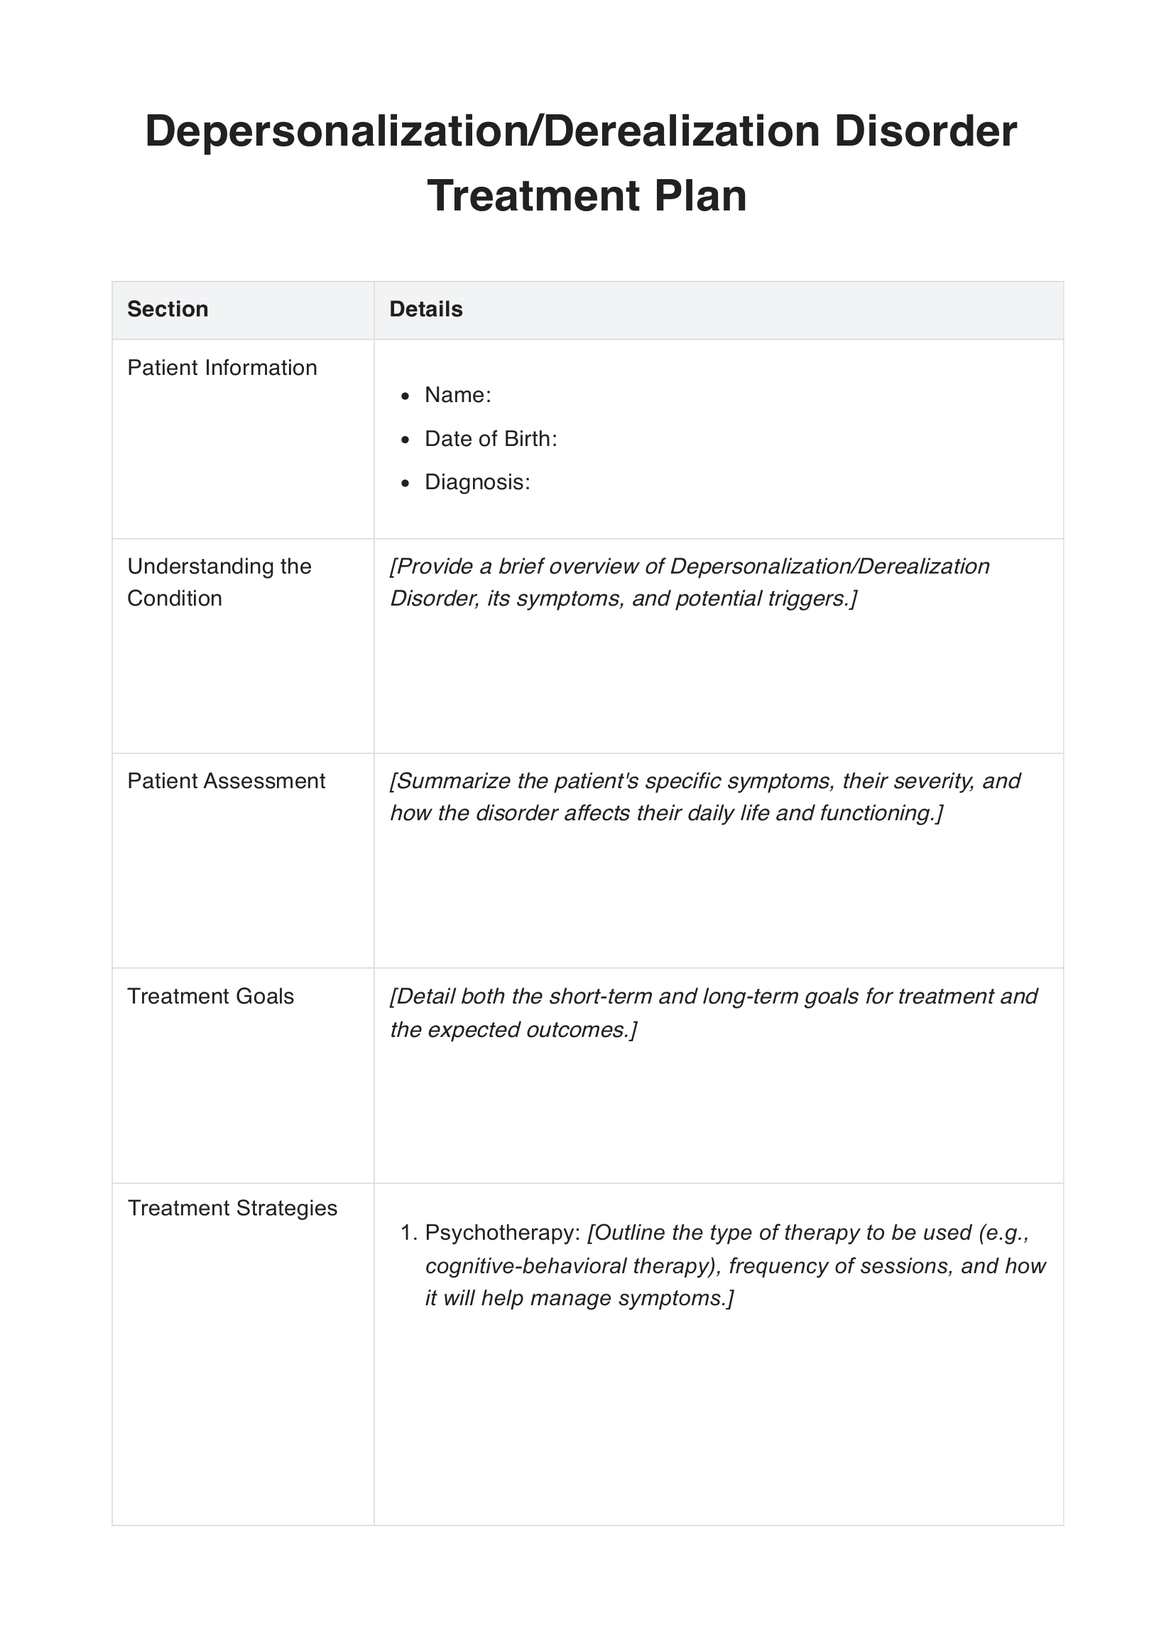 Depersonalization/Derealization Disorder Treatment Plan PDF Example